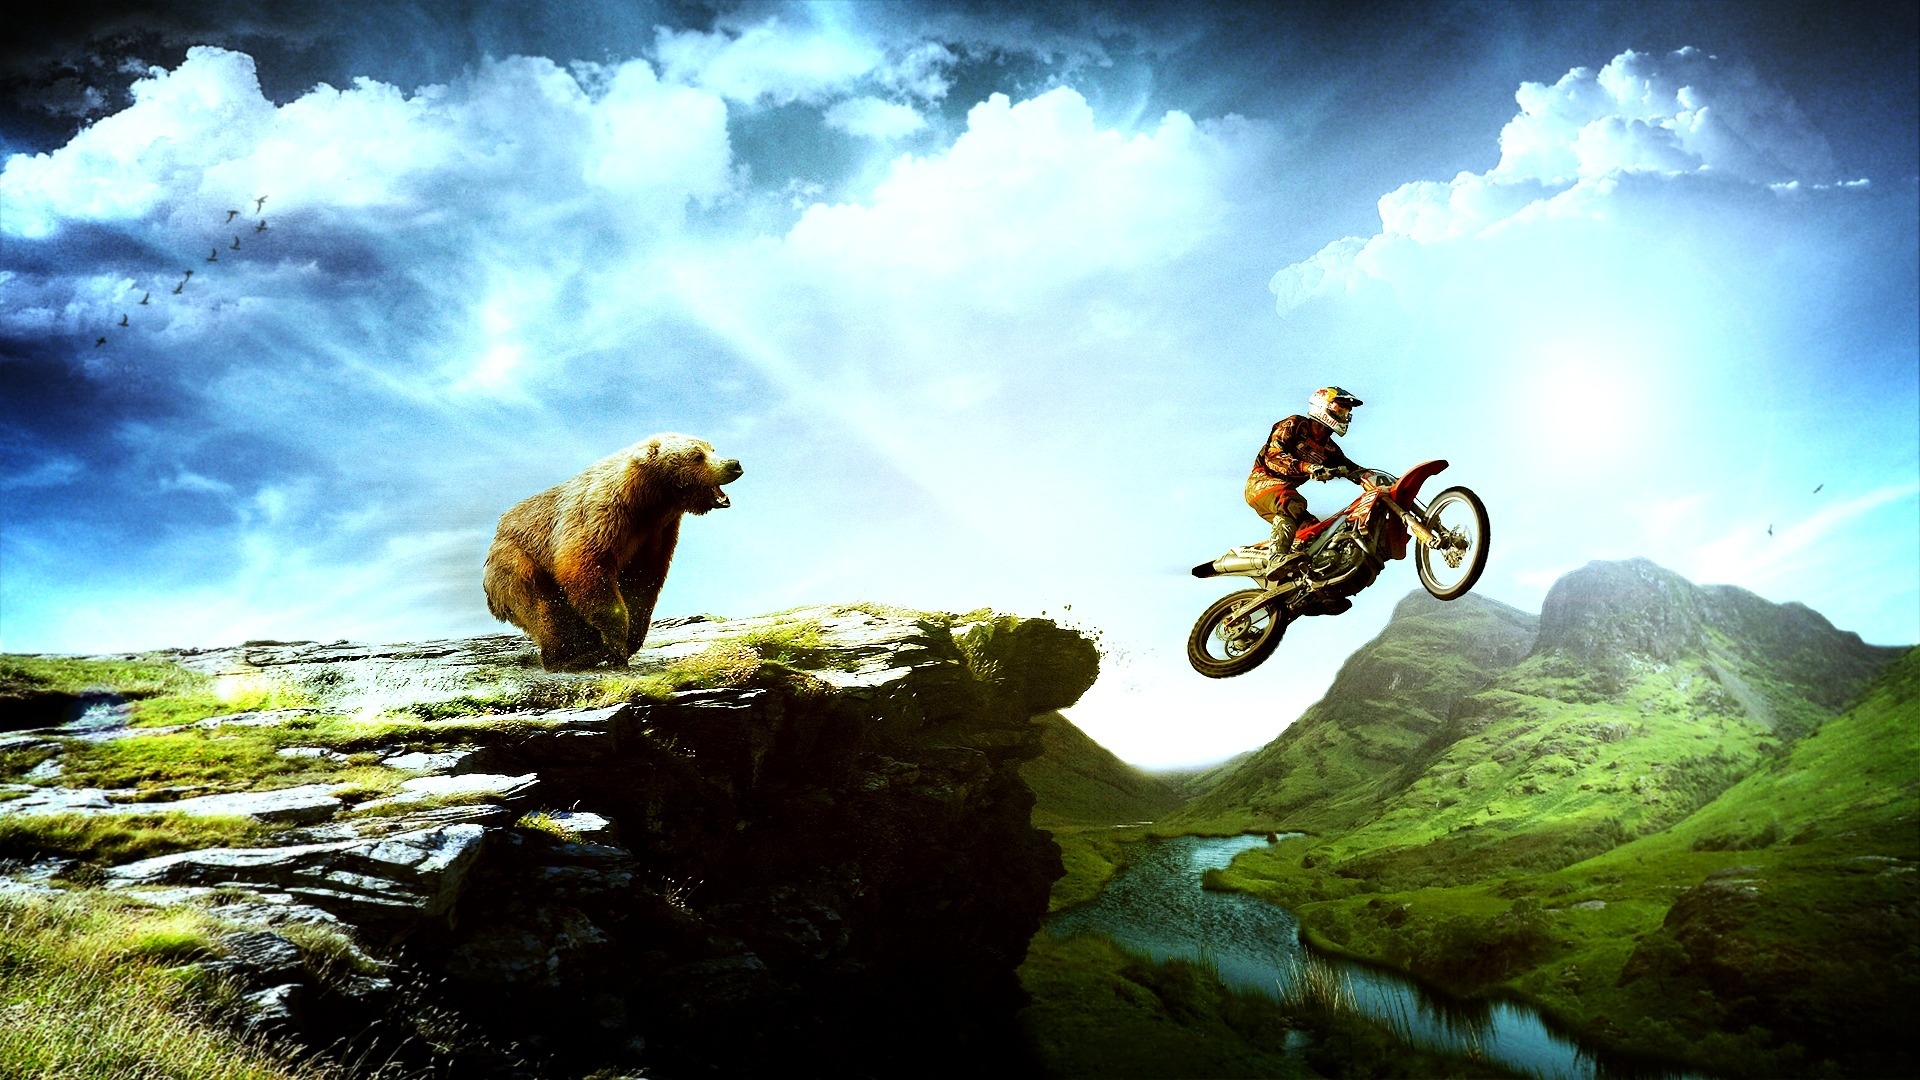 moto x play wallpaper hd,natur,fahrzeug,himmel,extremsport,mountainbiking